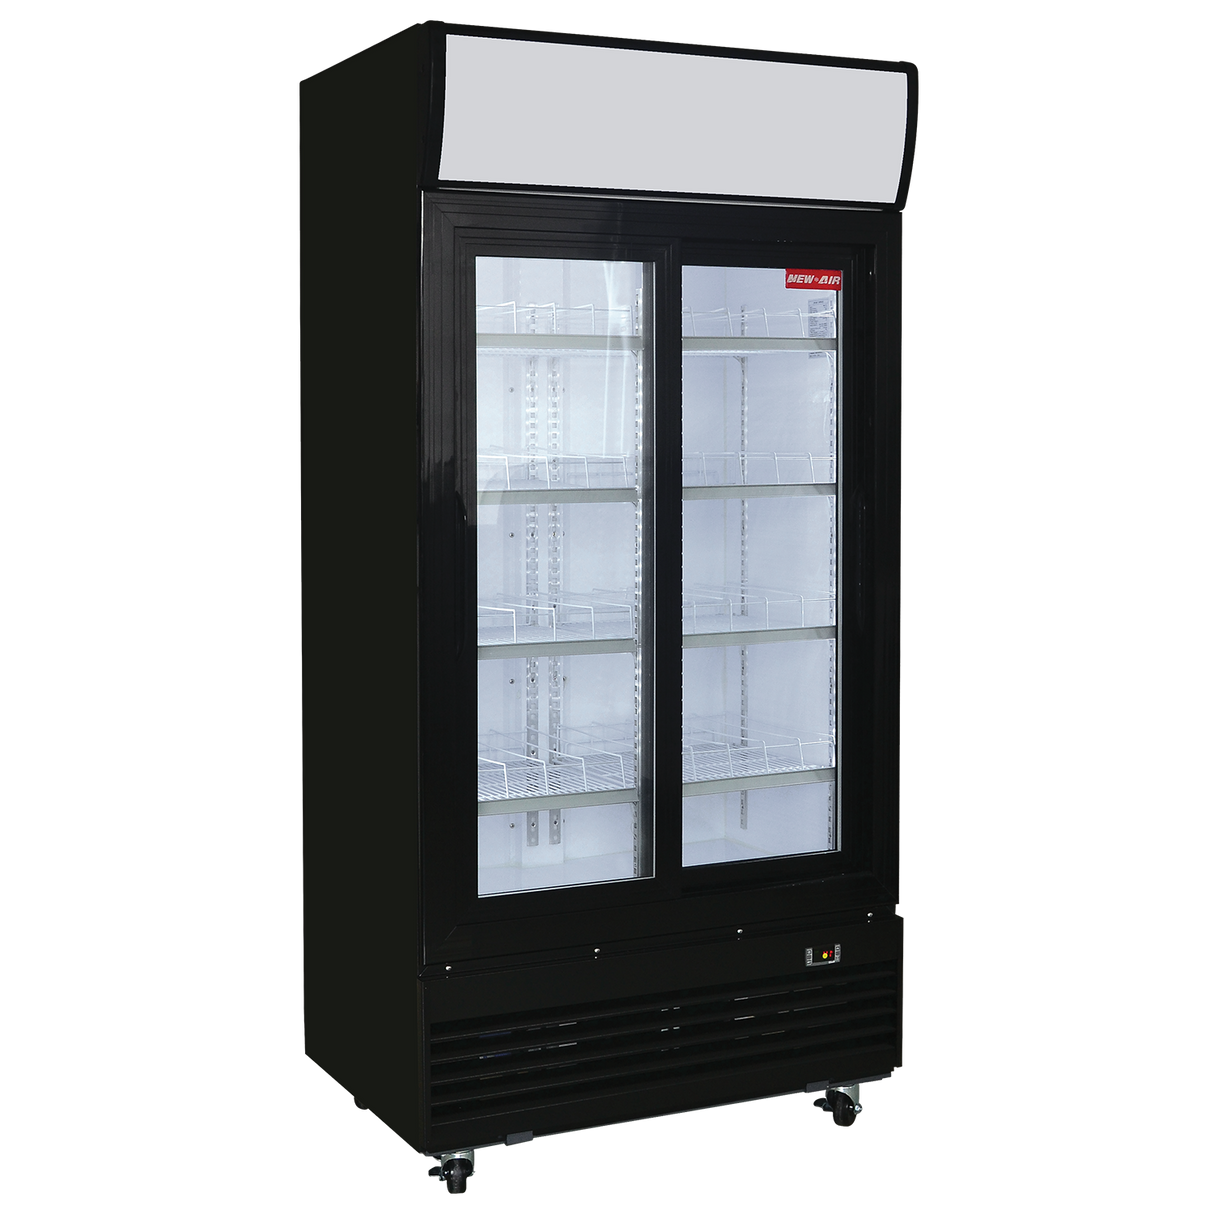 New Air NGR-40-S 28 p3 Refrigerator - 2 Doors